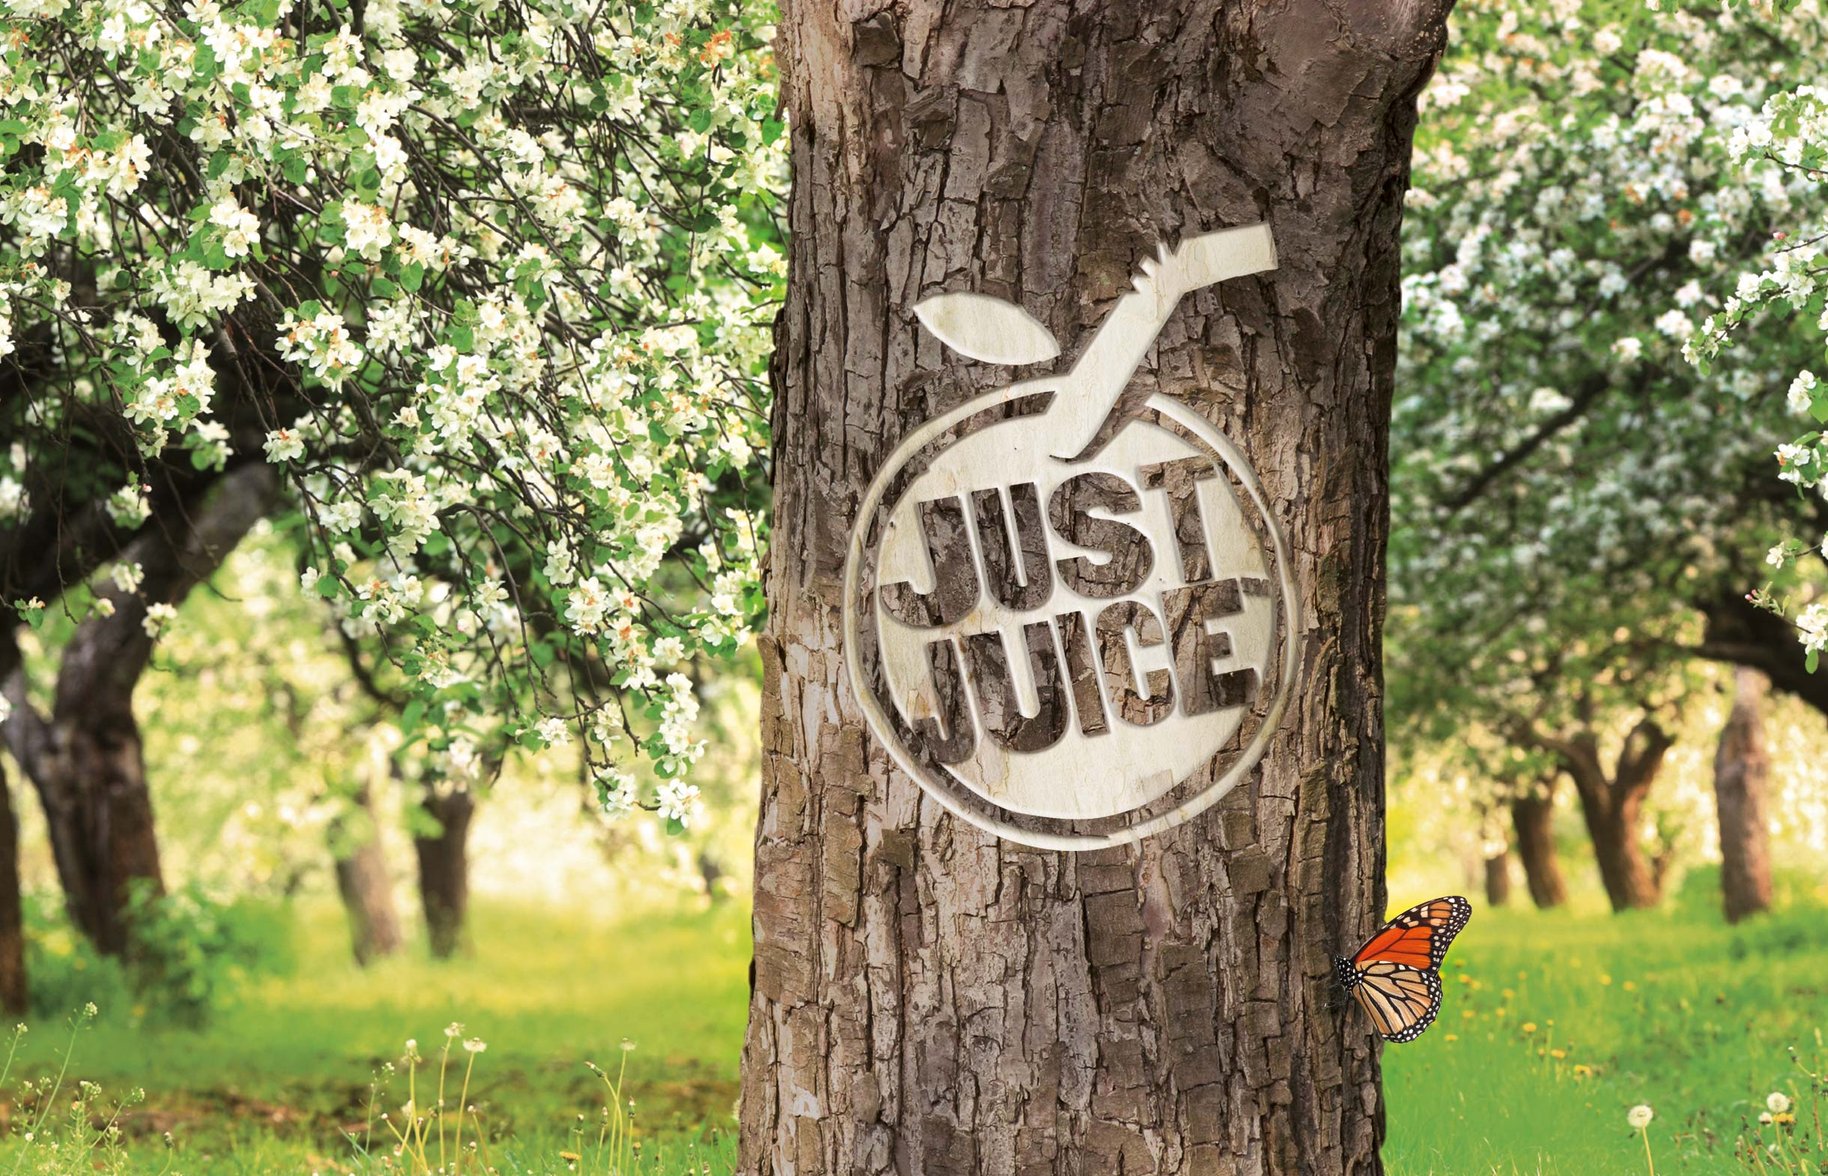 Just Juice logo carved tree